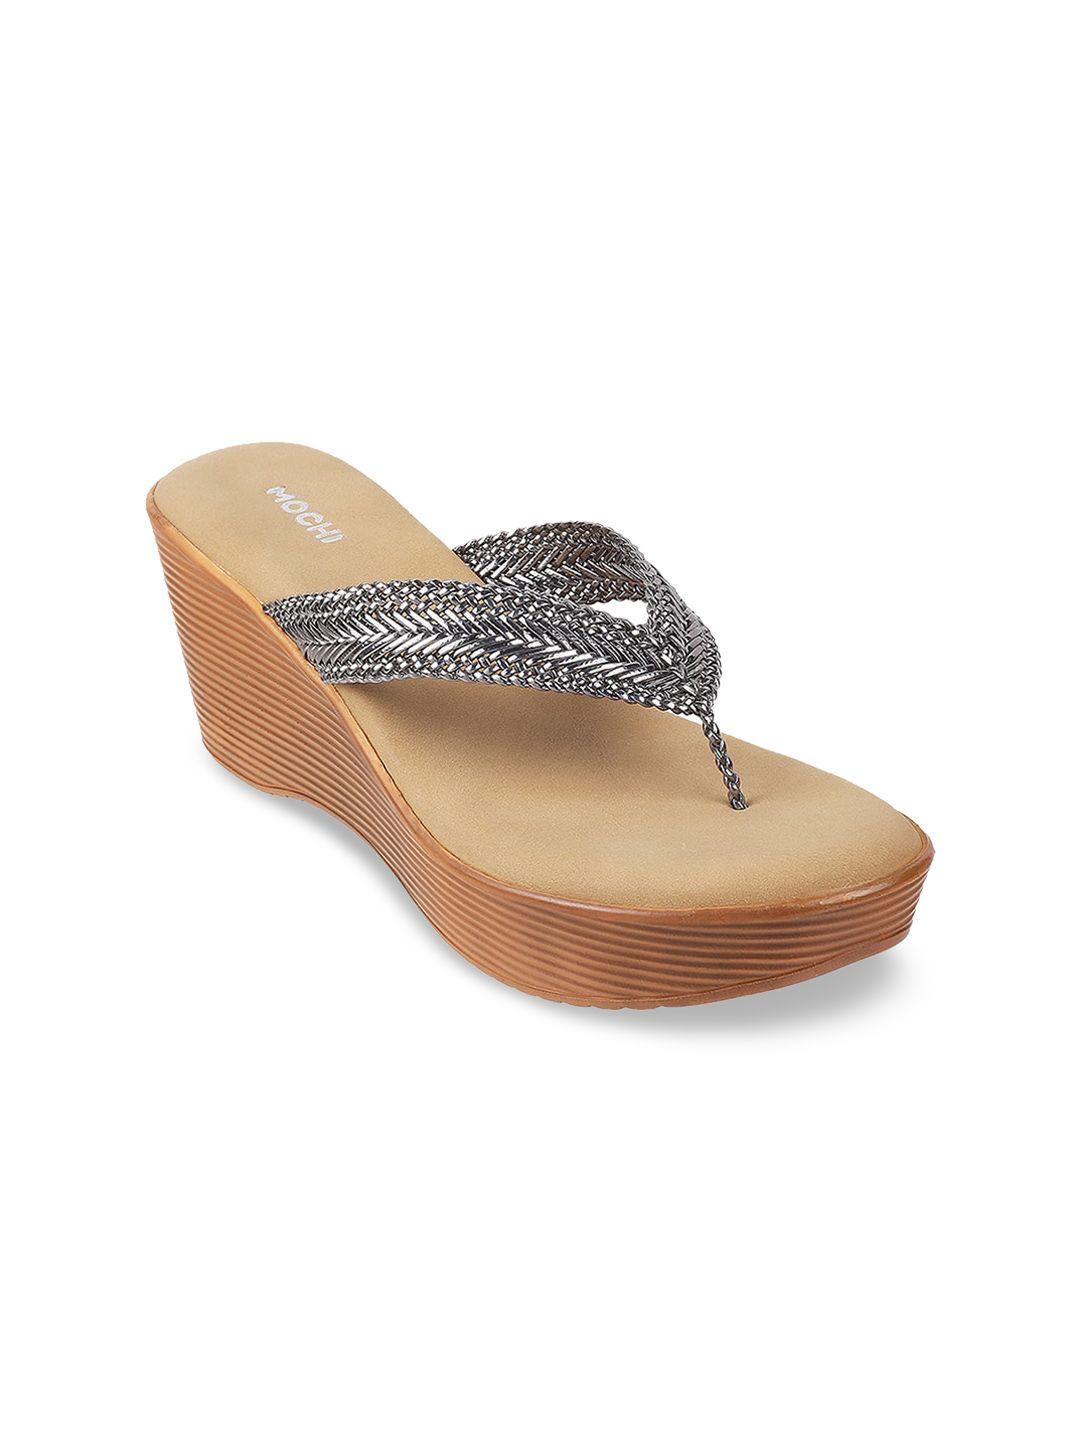 mochi ethnic wedge sandals heels